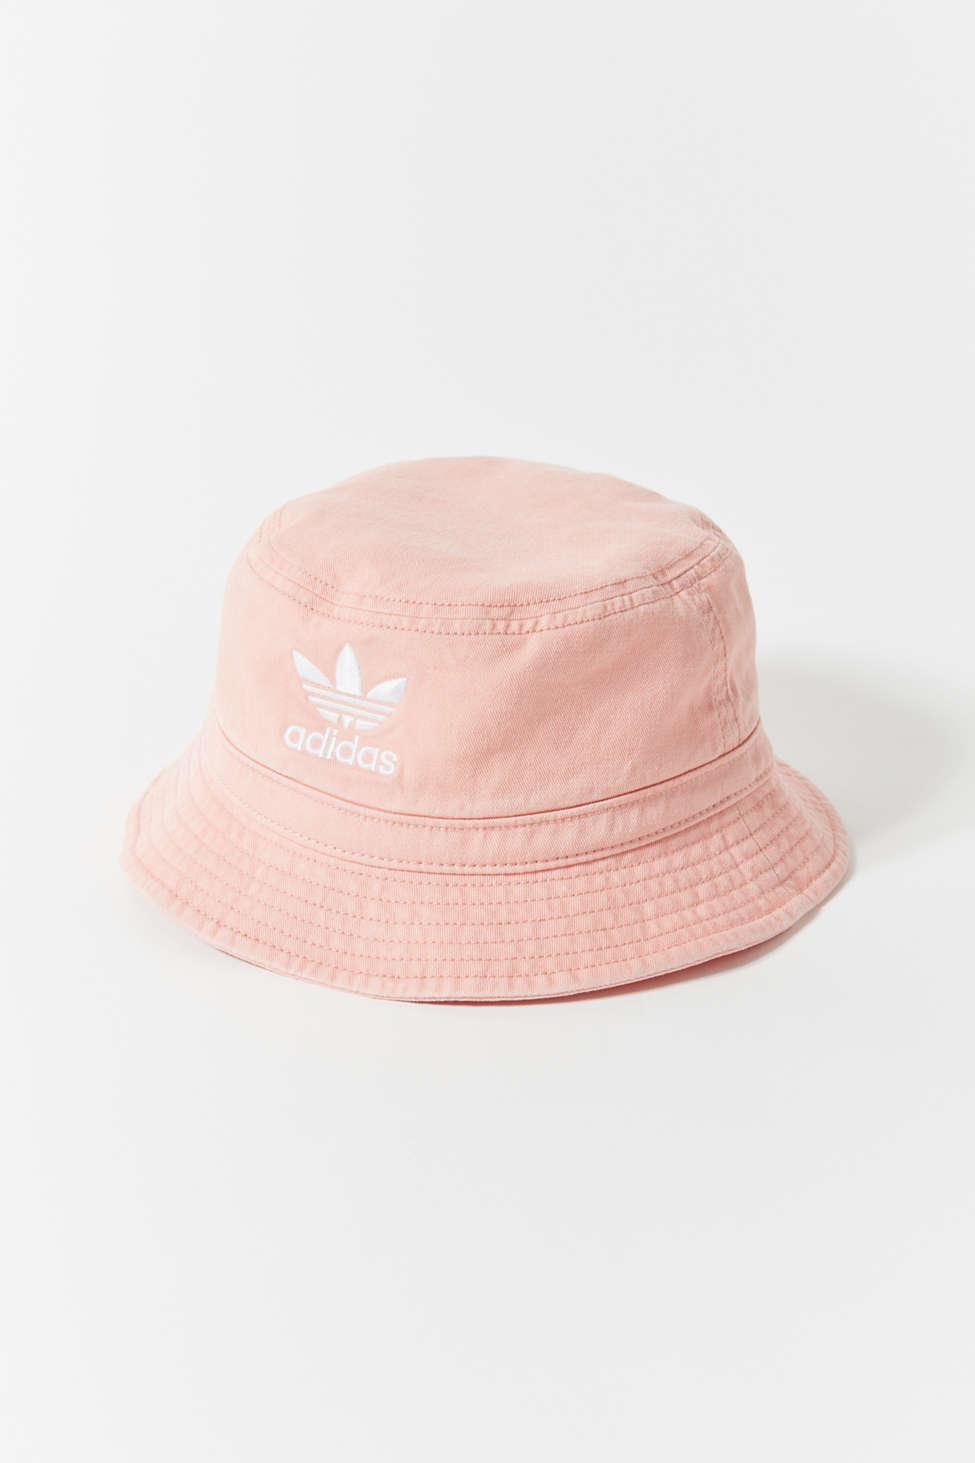 adidas pink bucket hat